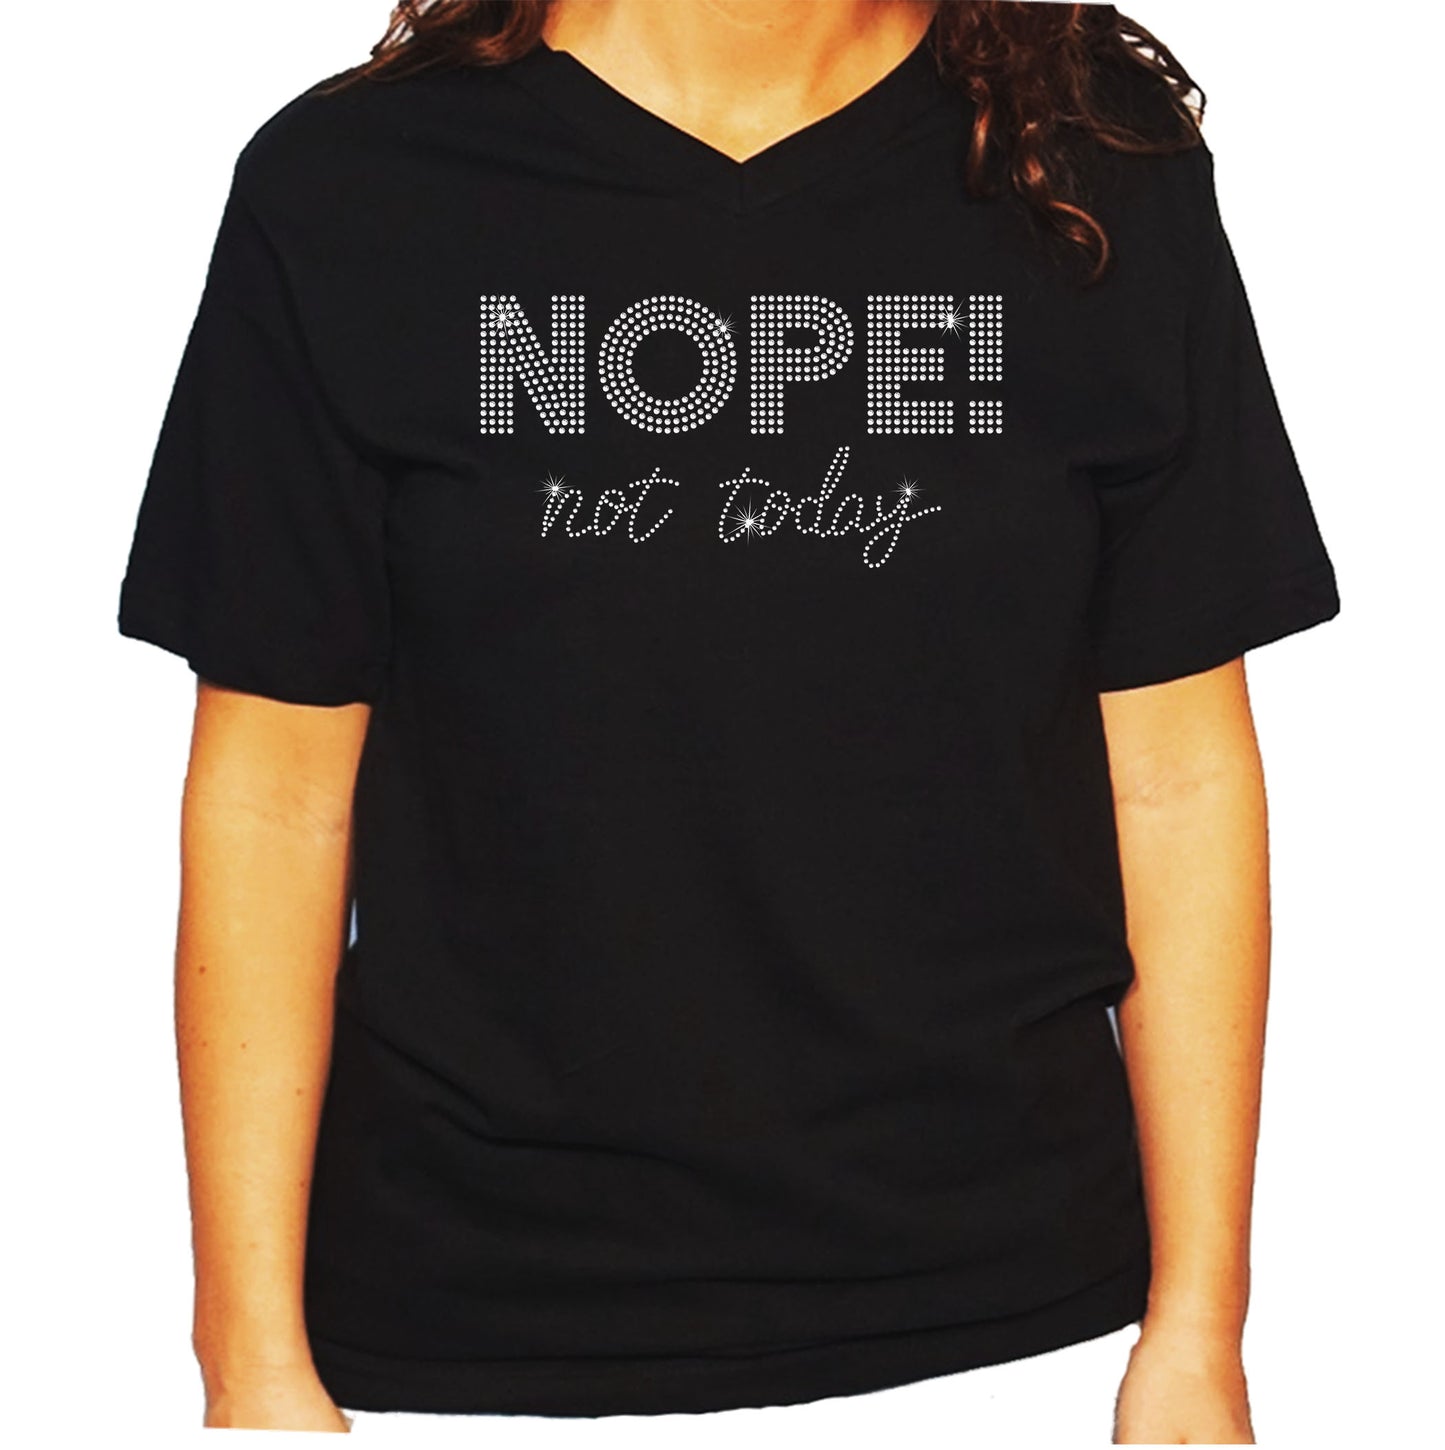 Women's/Unisex Rhinestone T-Shirt with Nope Not Today Bling Shirt